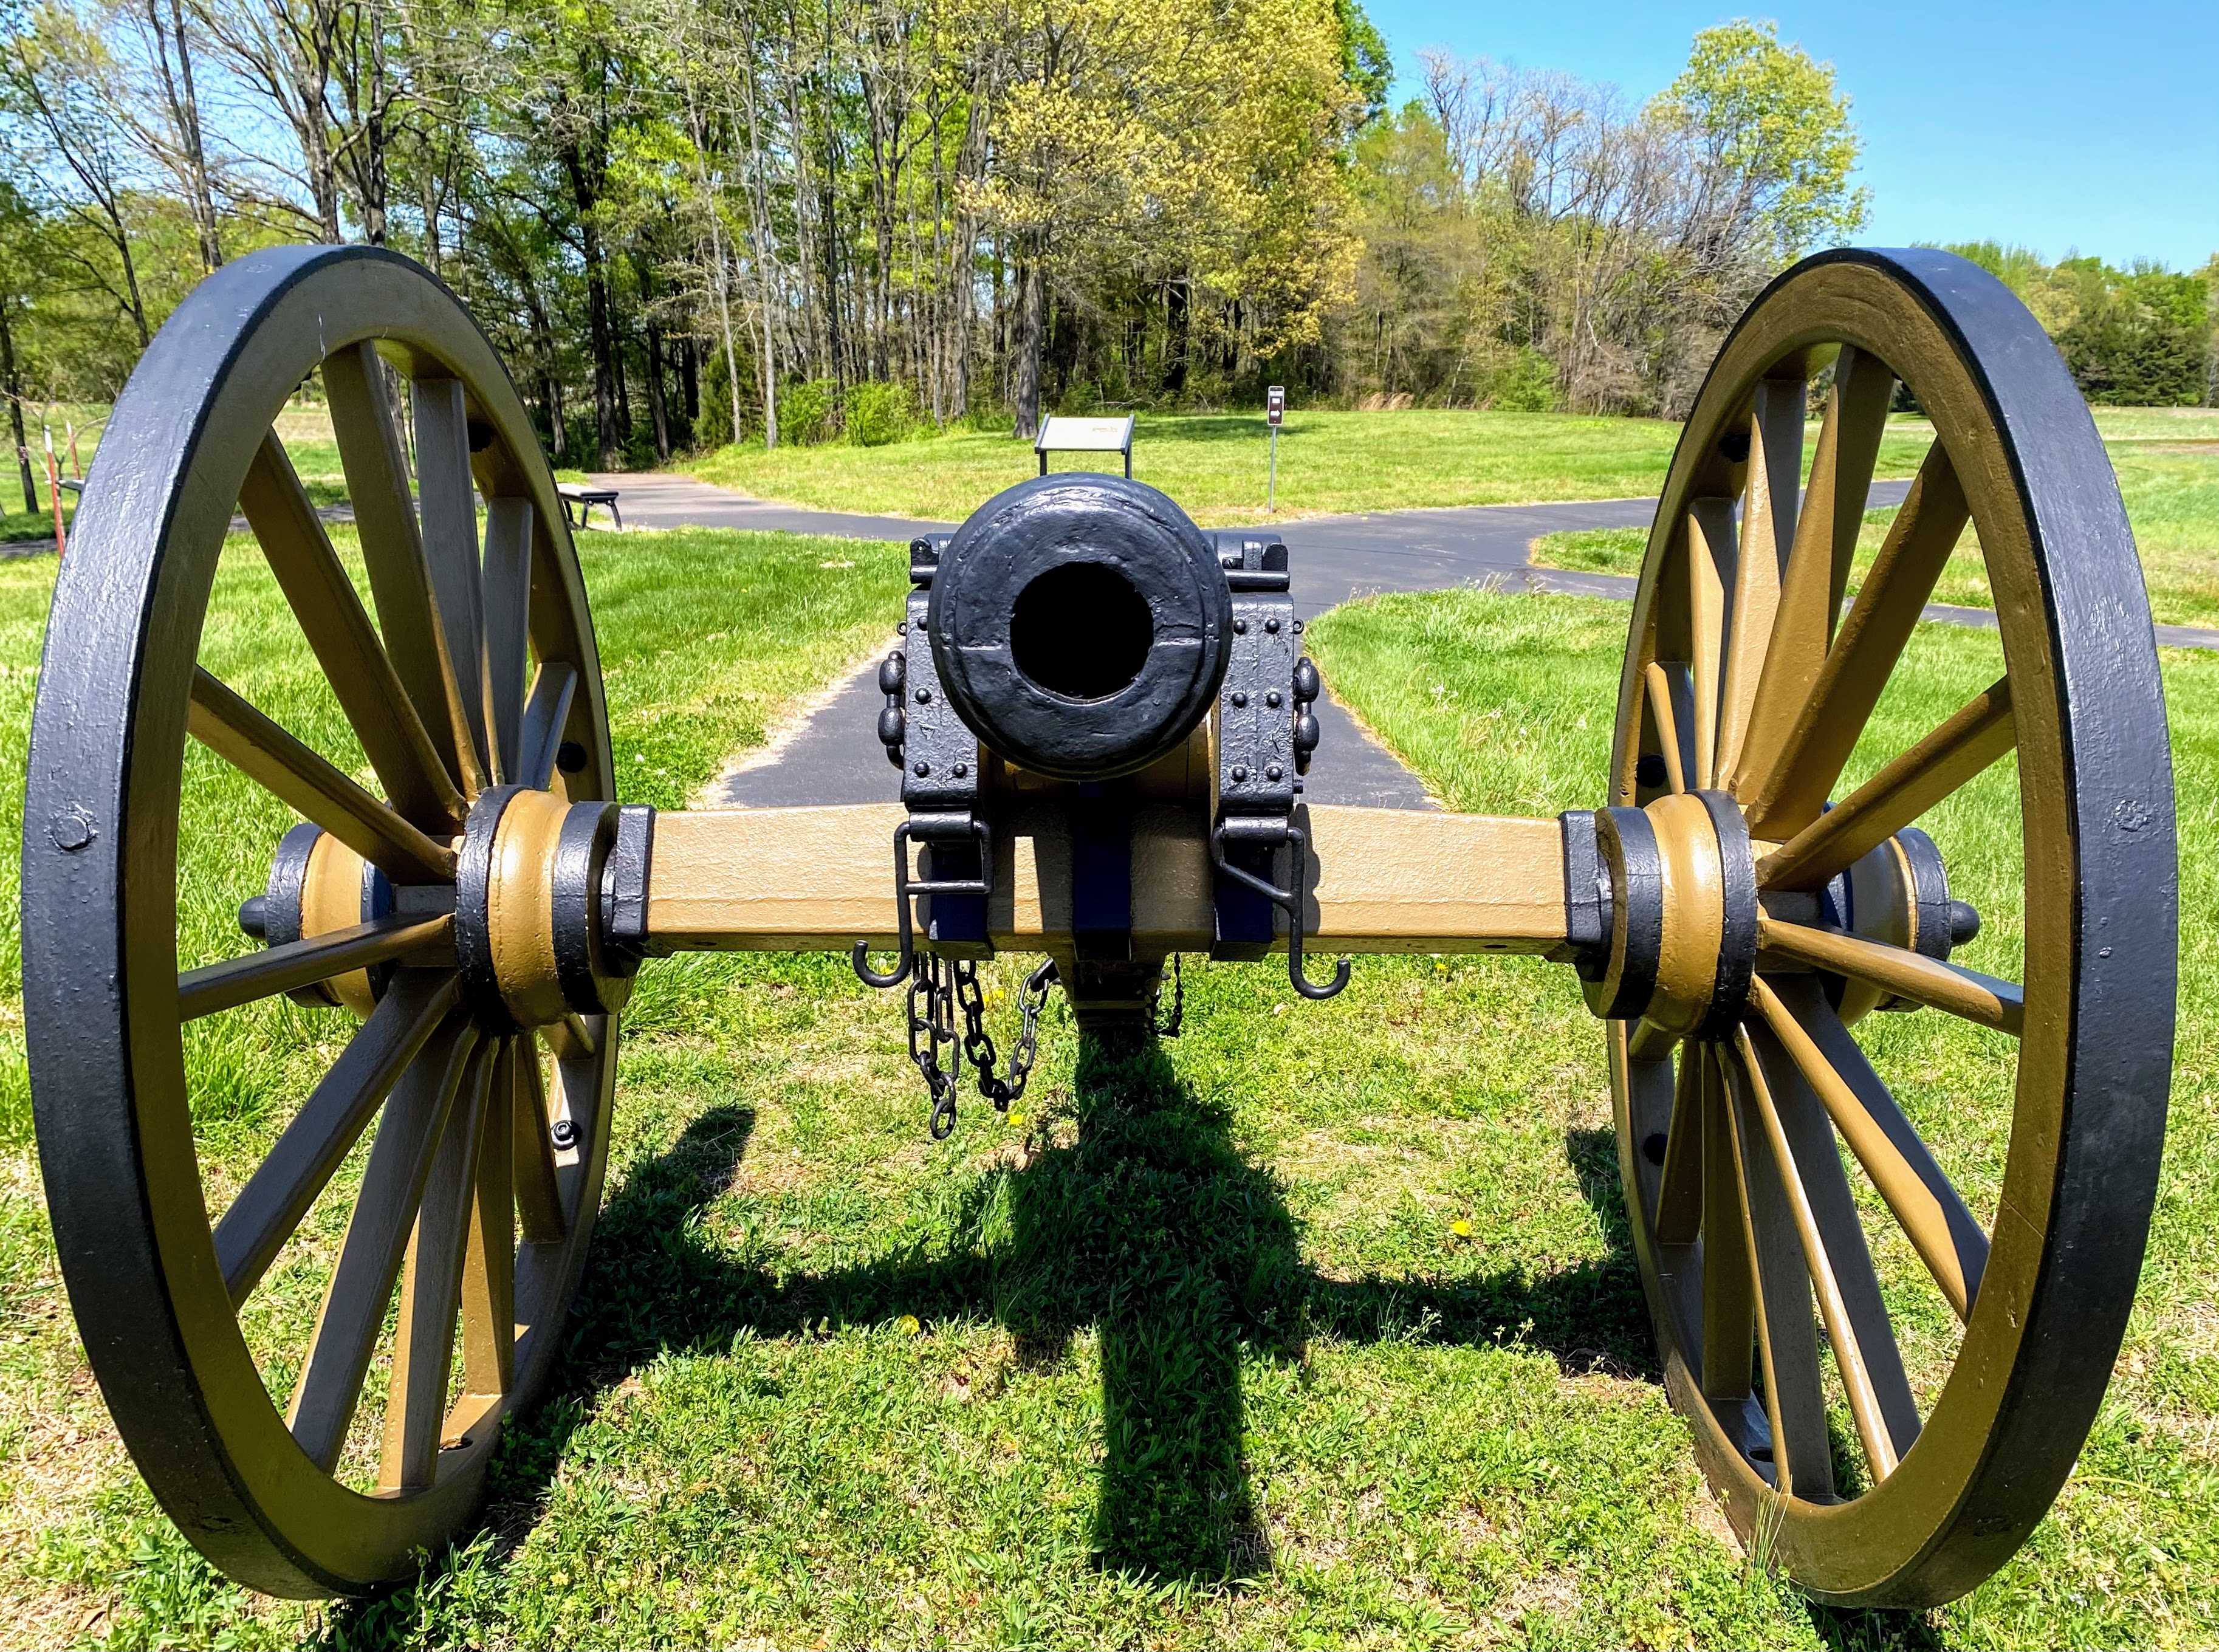 Confederate Artillery near the marker